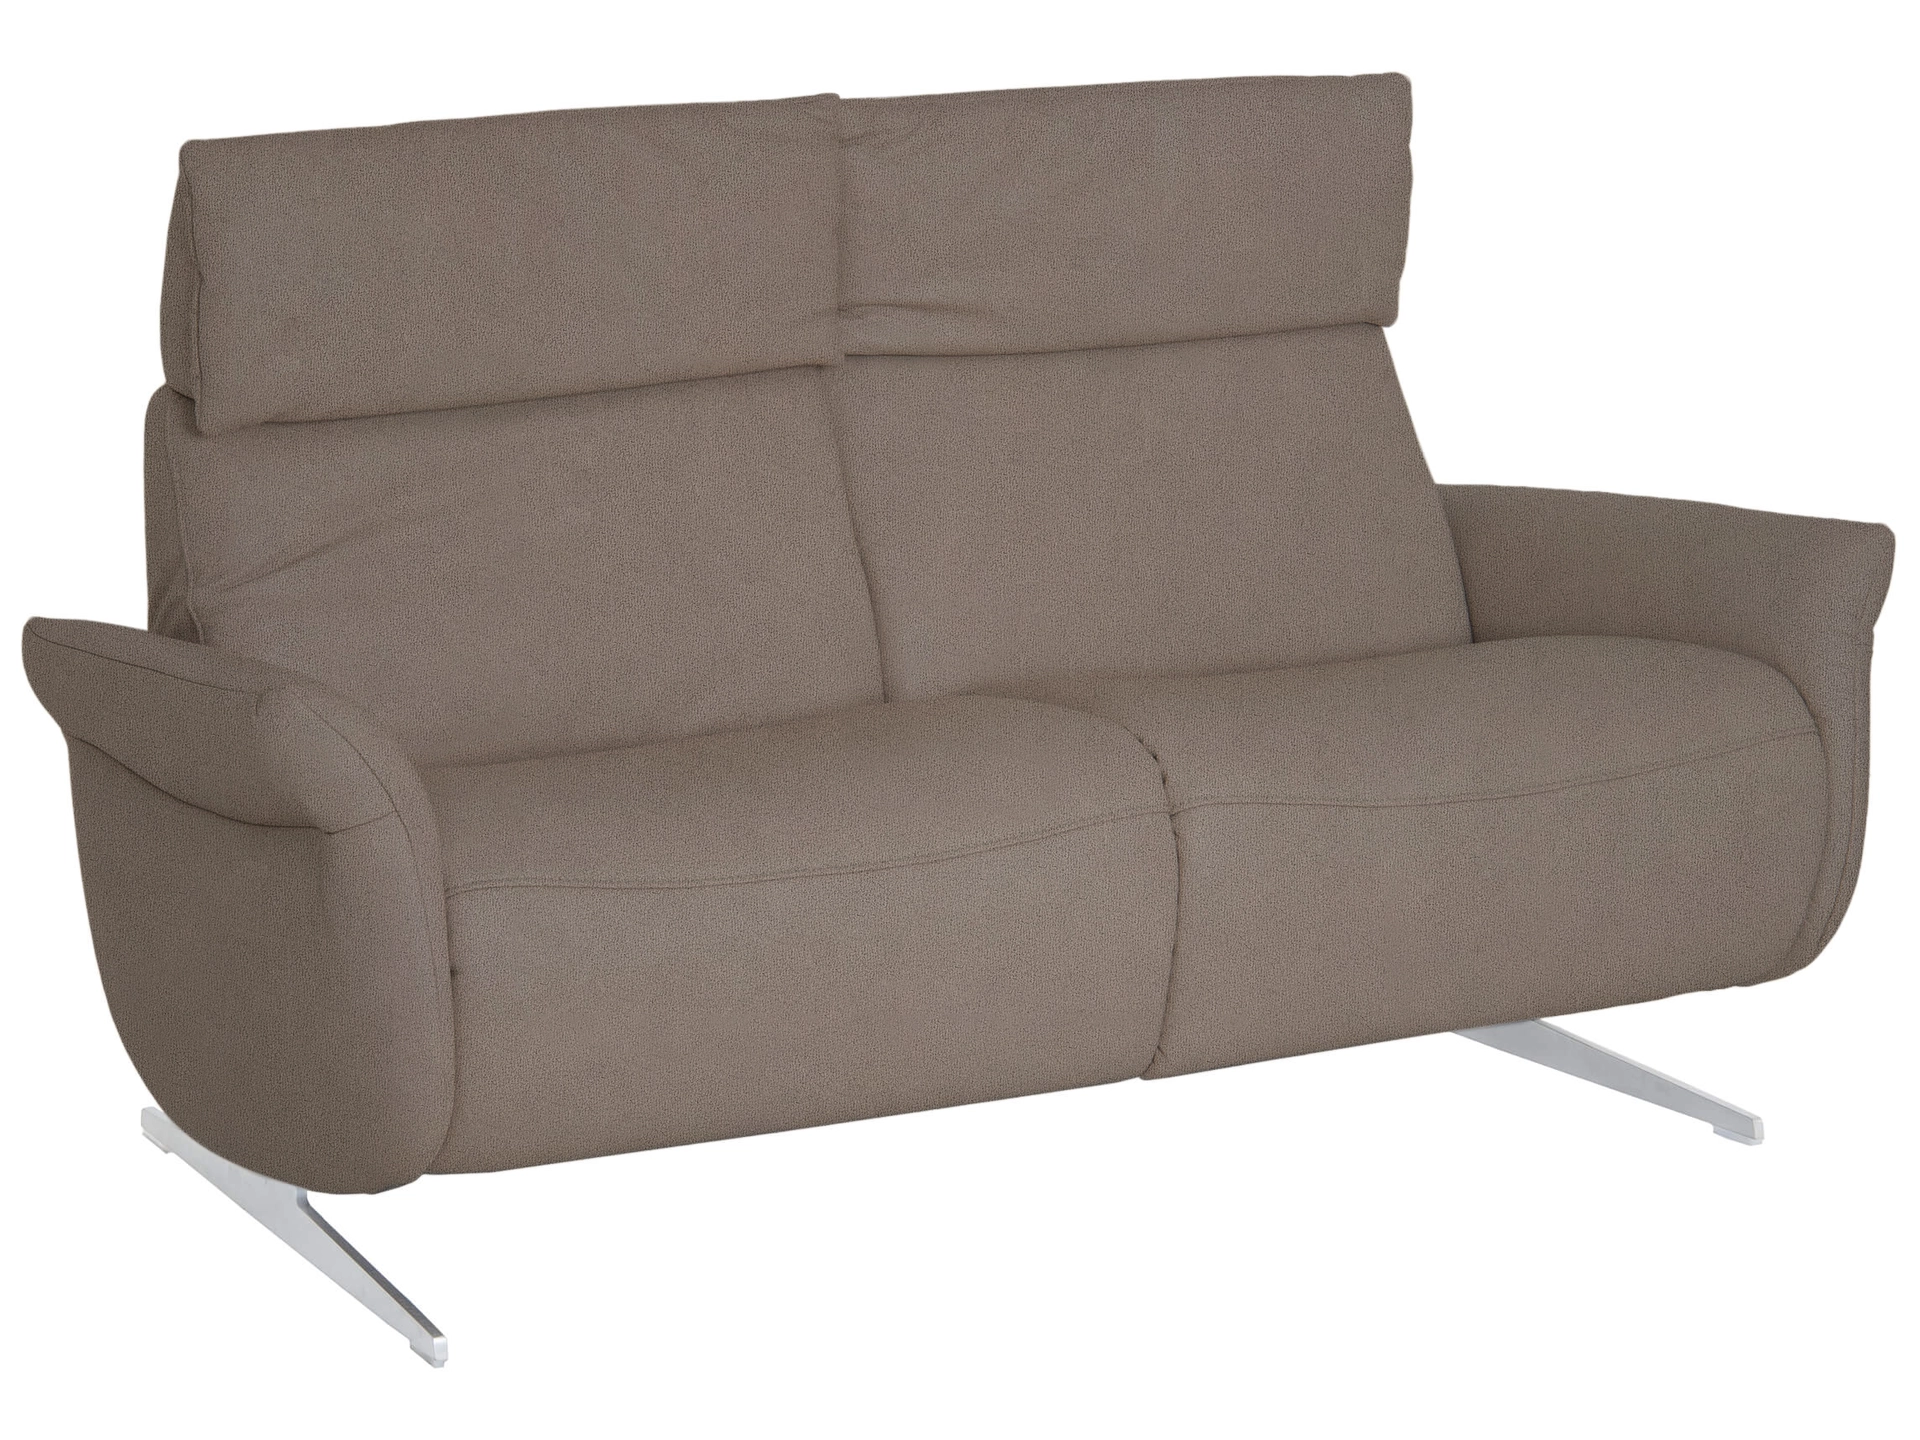 Sofa Chester Basic B: 169 cm Himolla / Farbe: Schlamm / Material: Stoff Basic